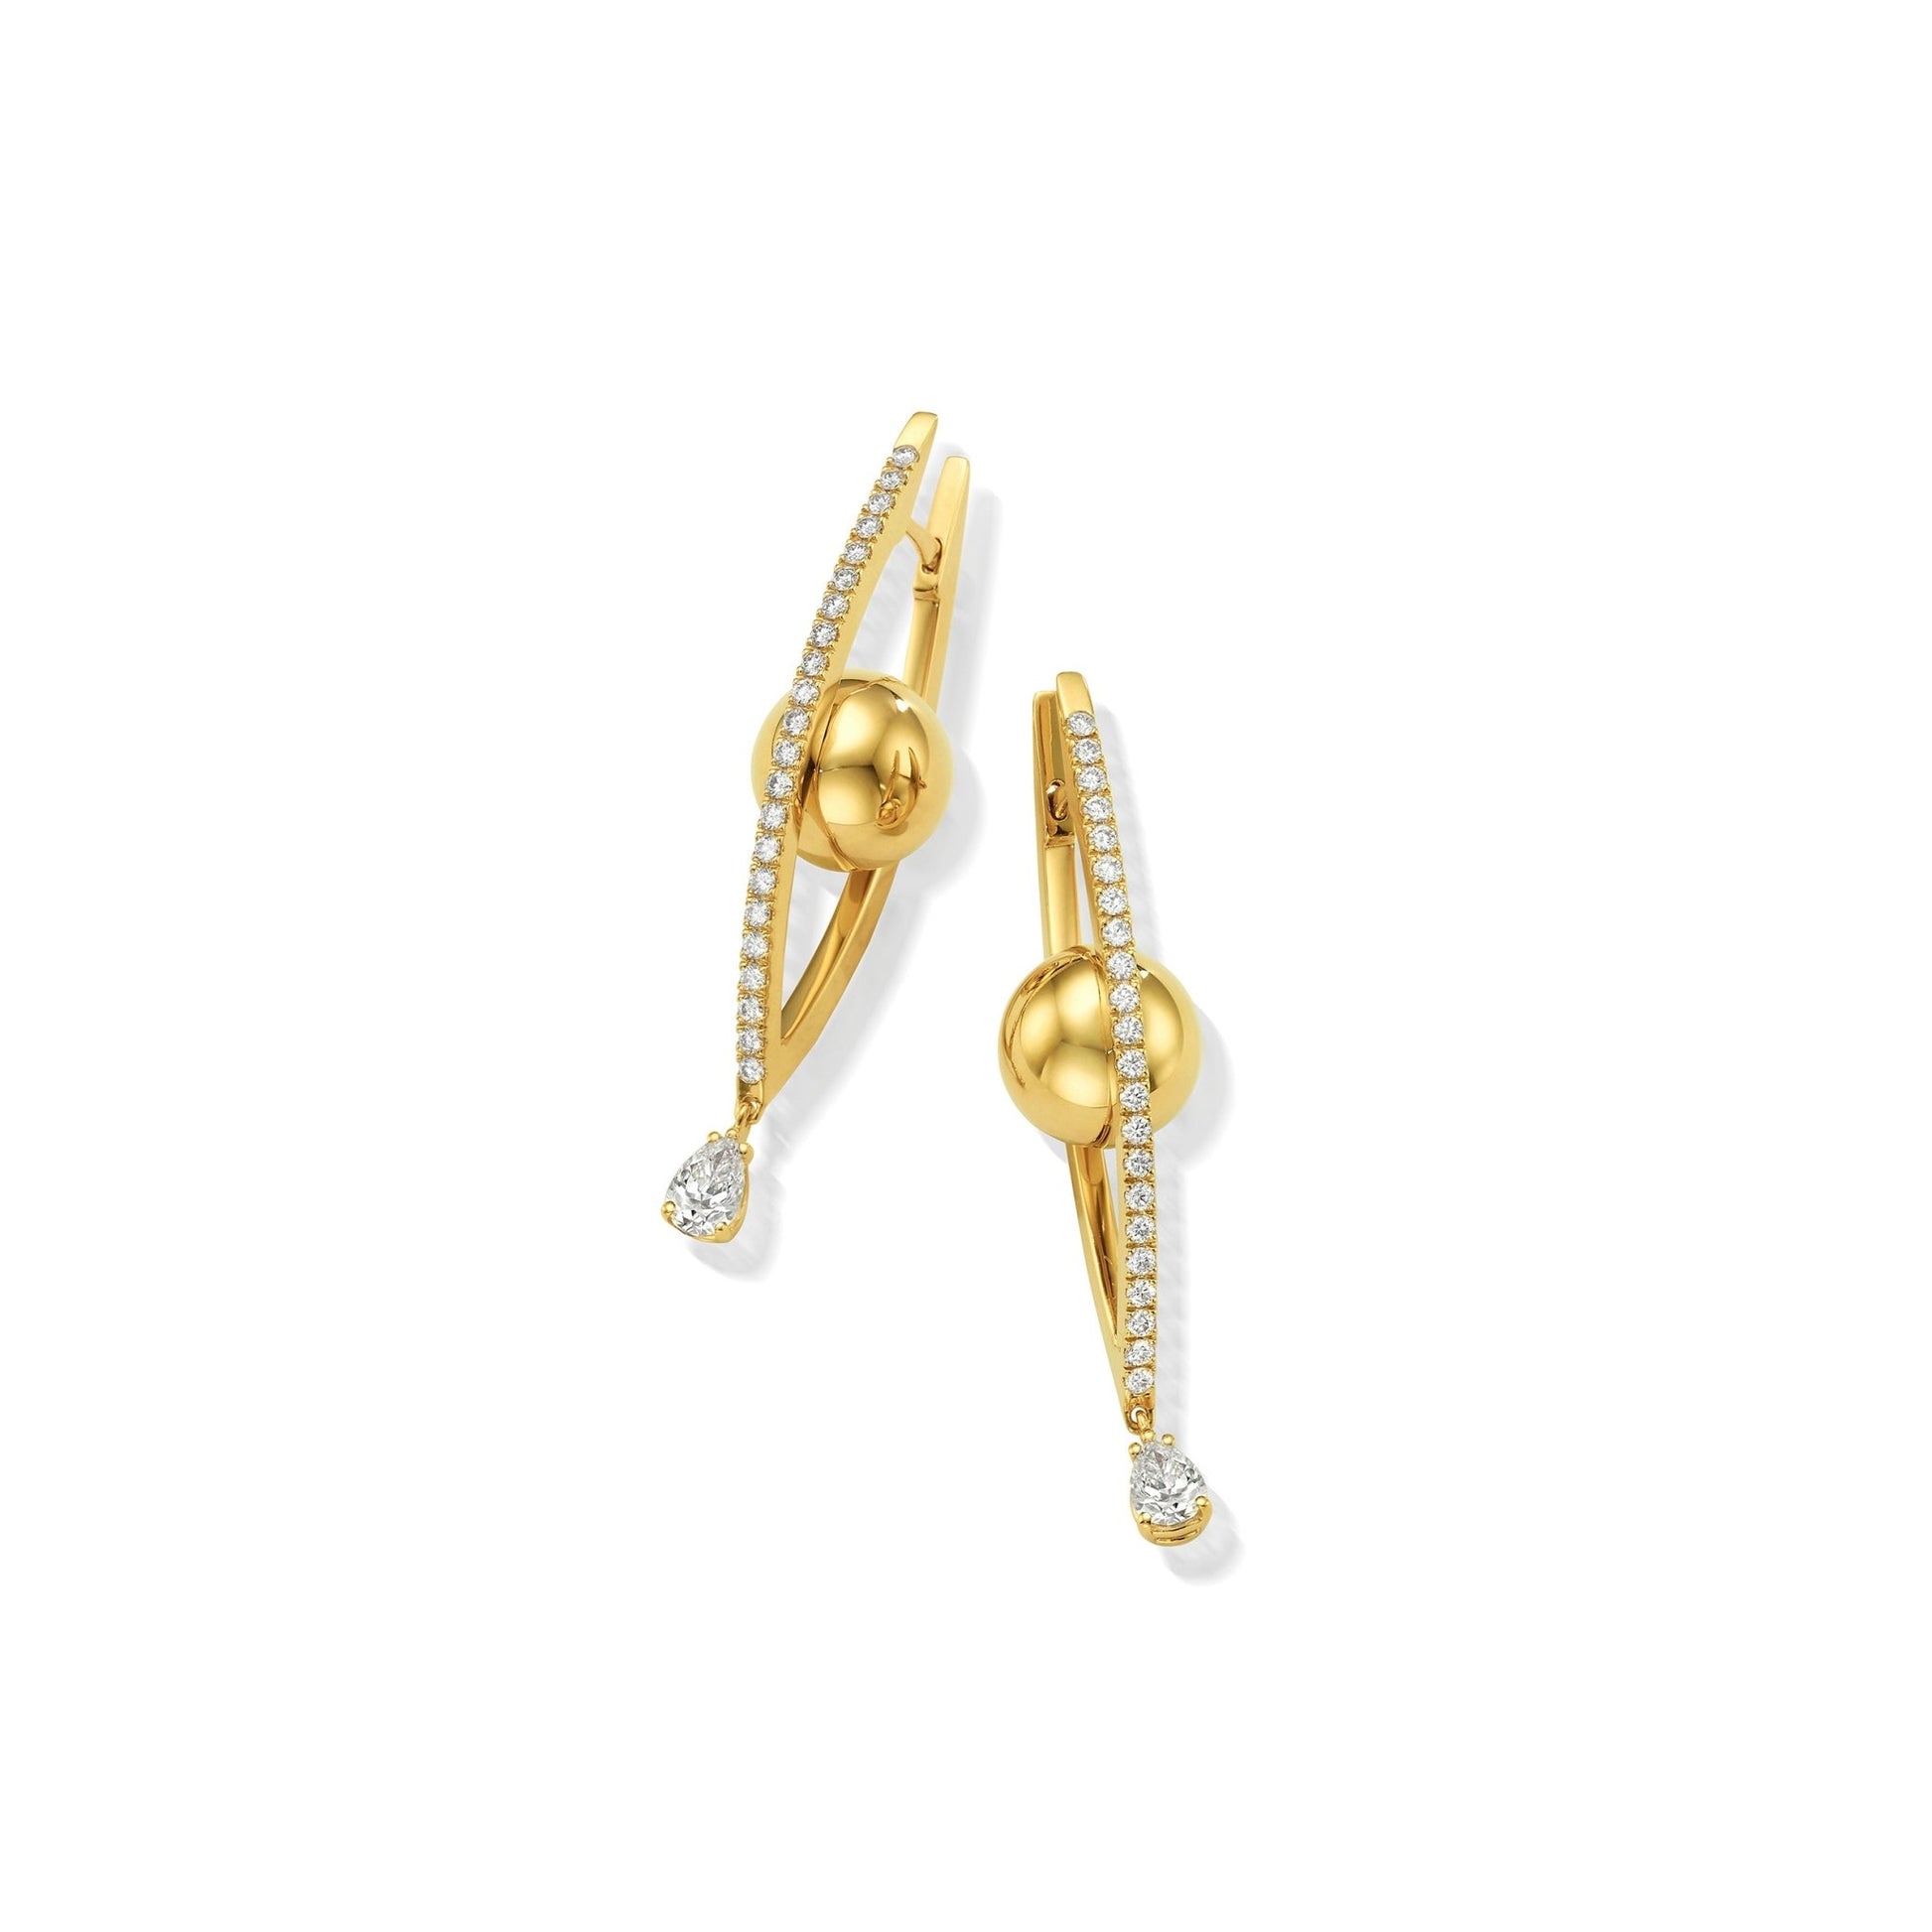 Medium Yellow Gold Reflections Hoop Earrings with White Diamonds - Cadar